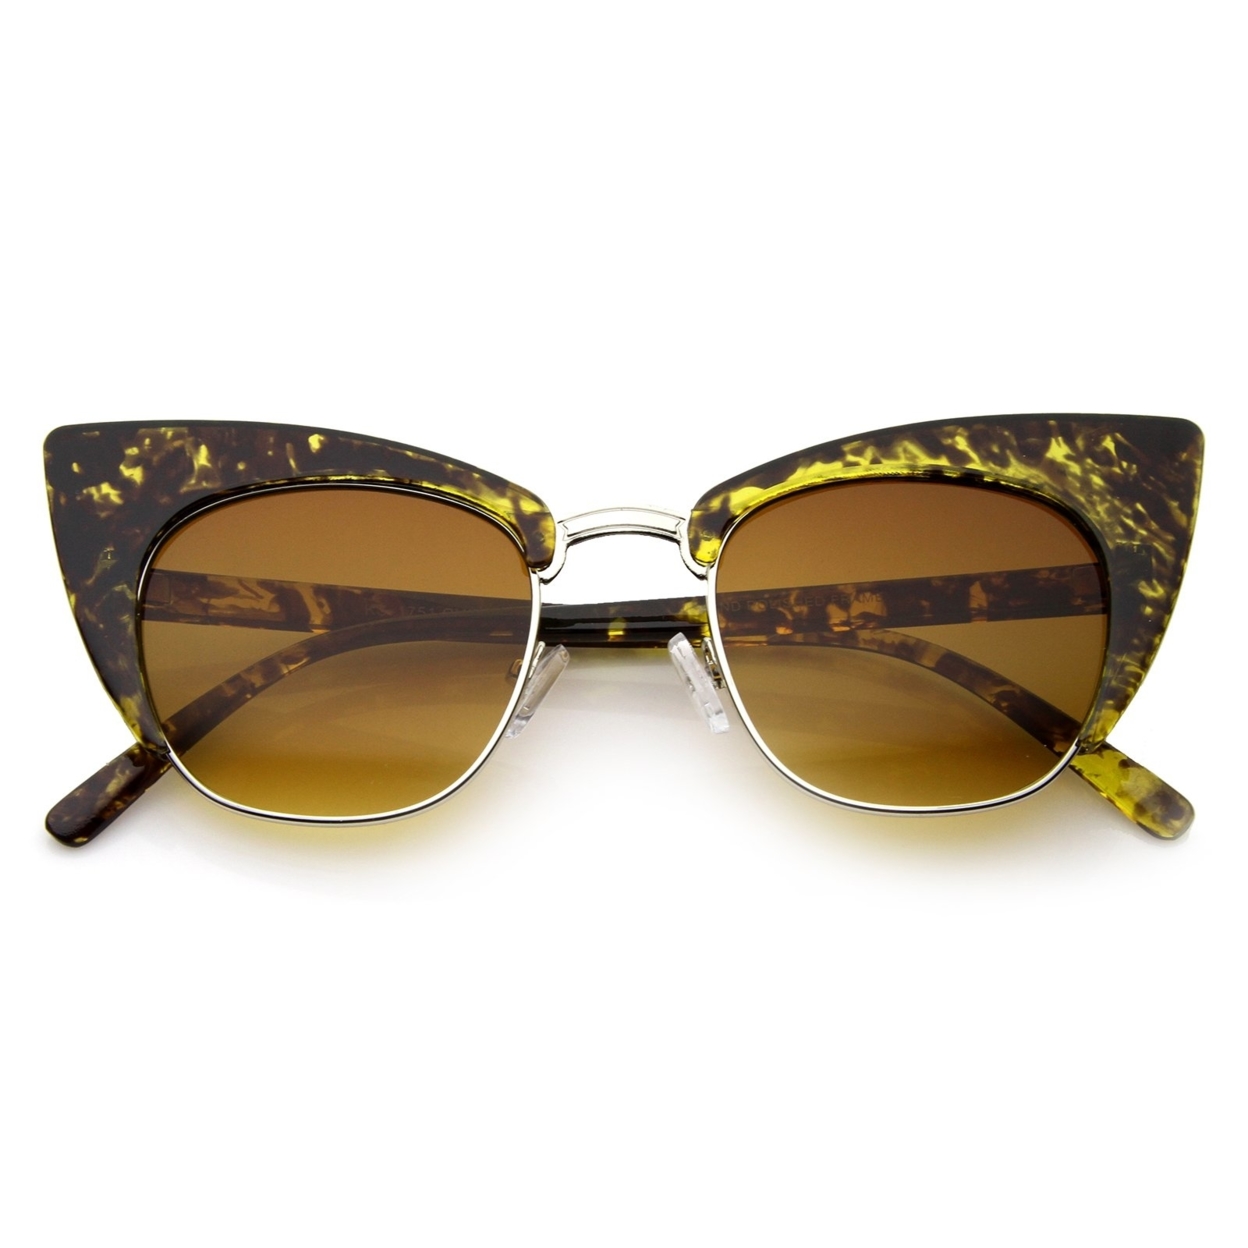 Women's High Fashion Half Frame Bold Square Cat Eye Sunglasses 50mm - Black / Lavender